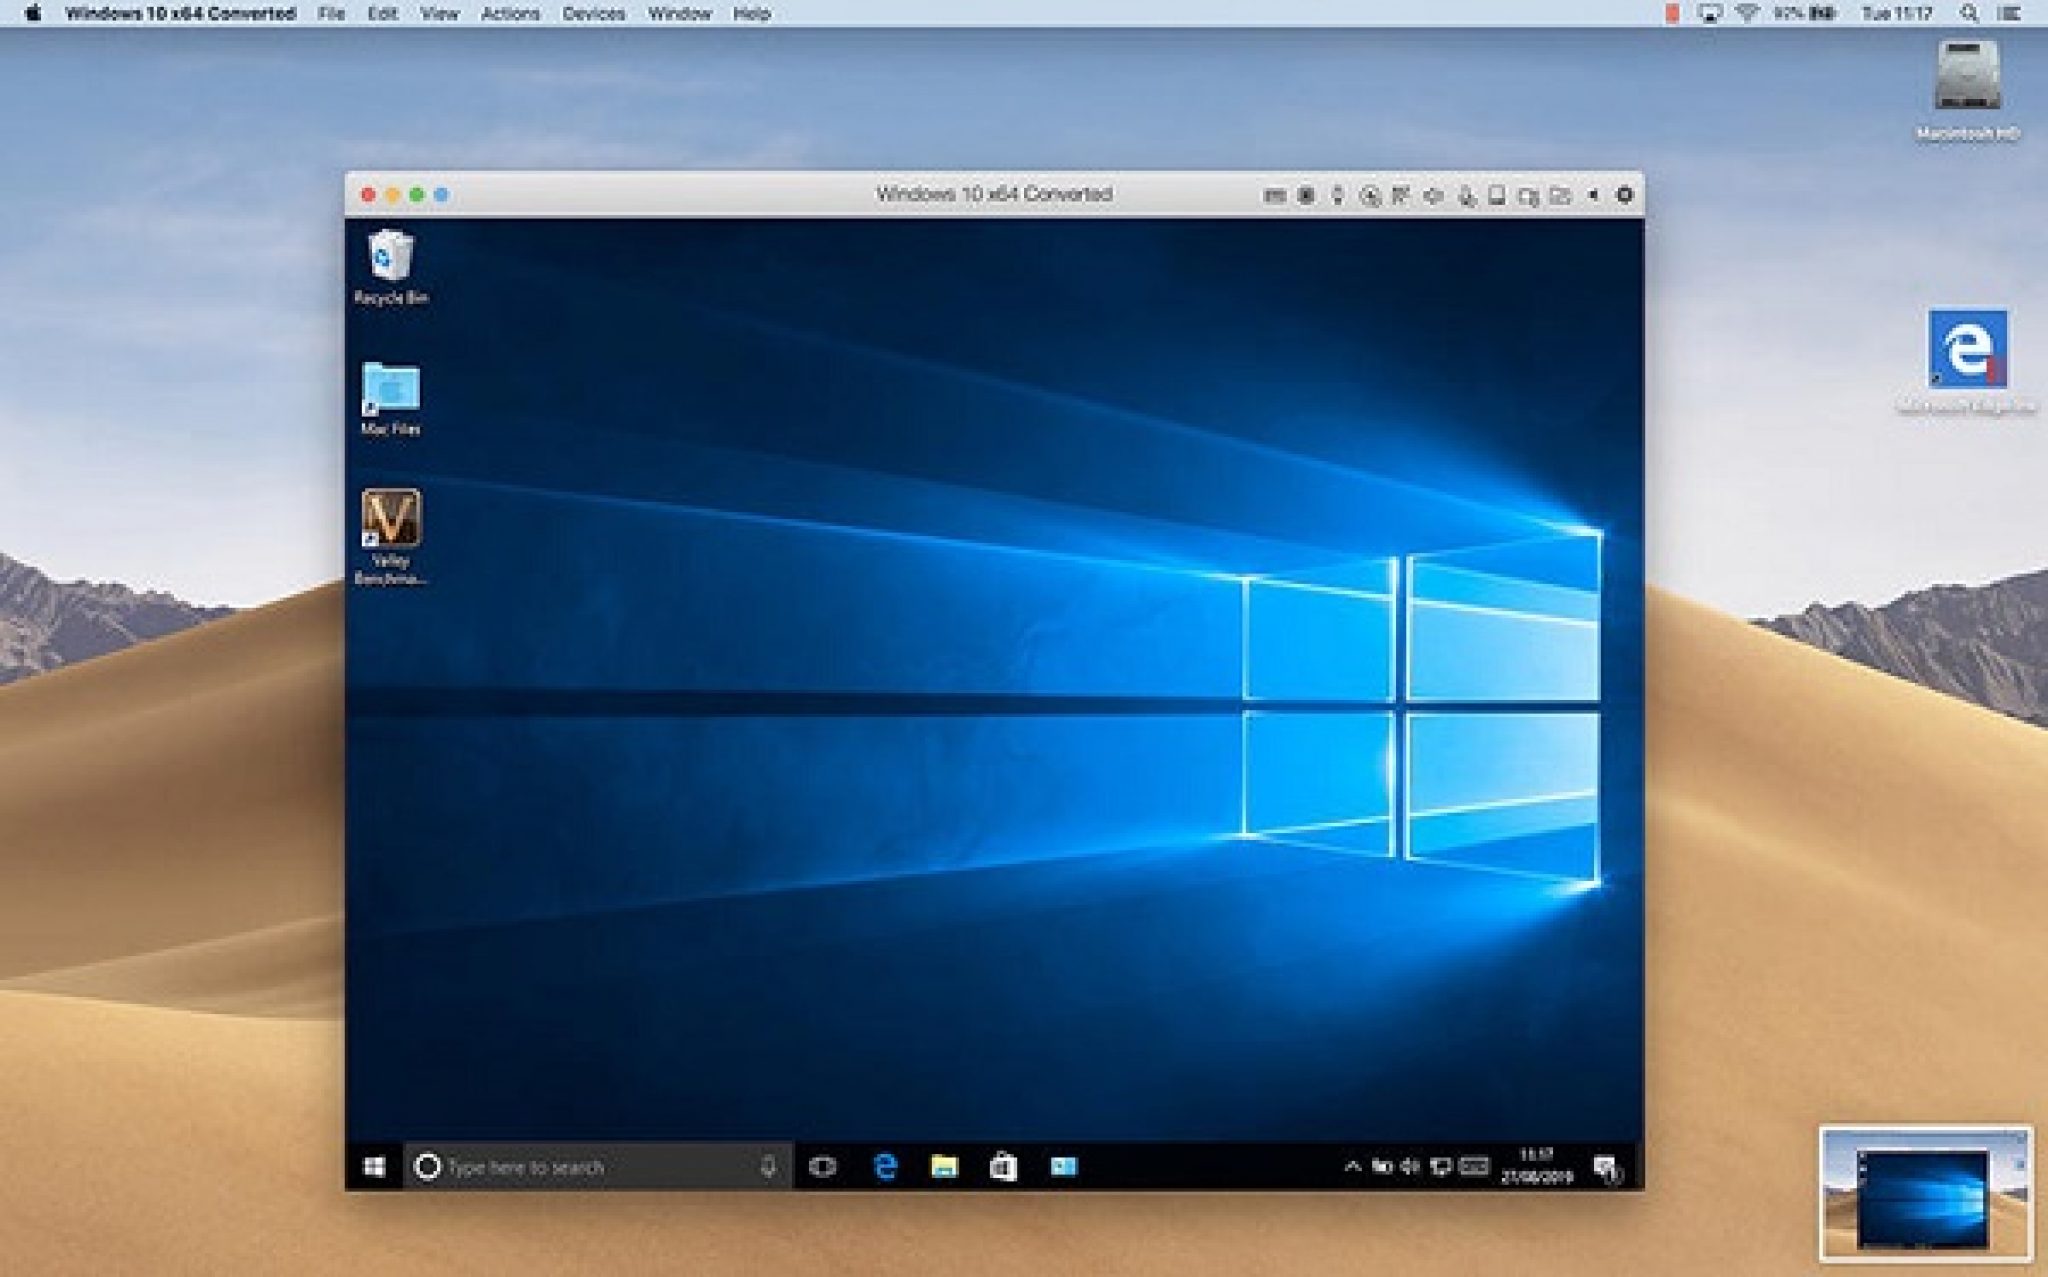 parallels desktop for windows